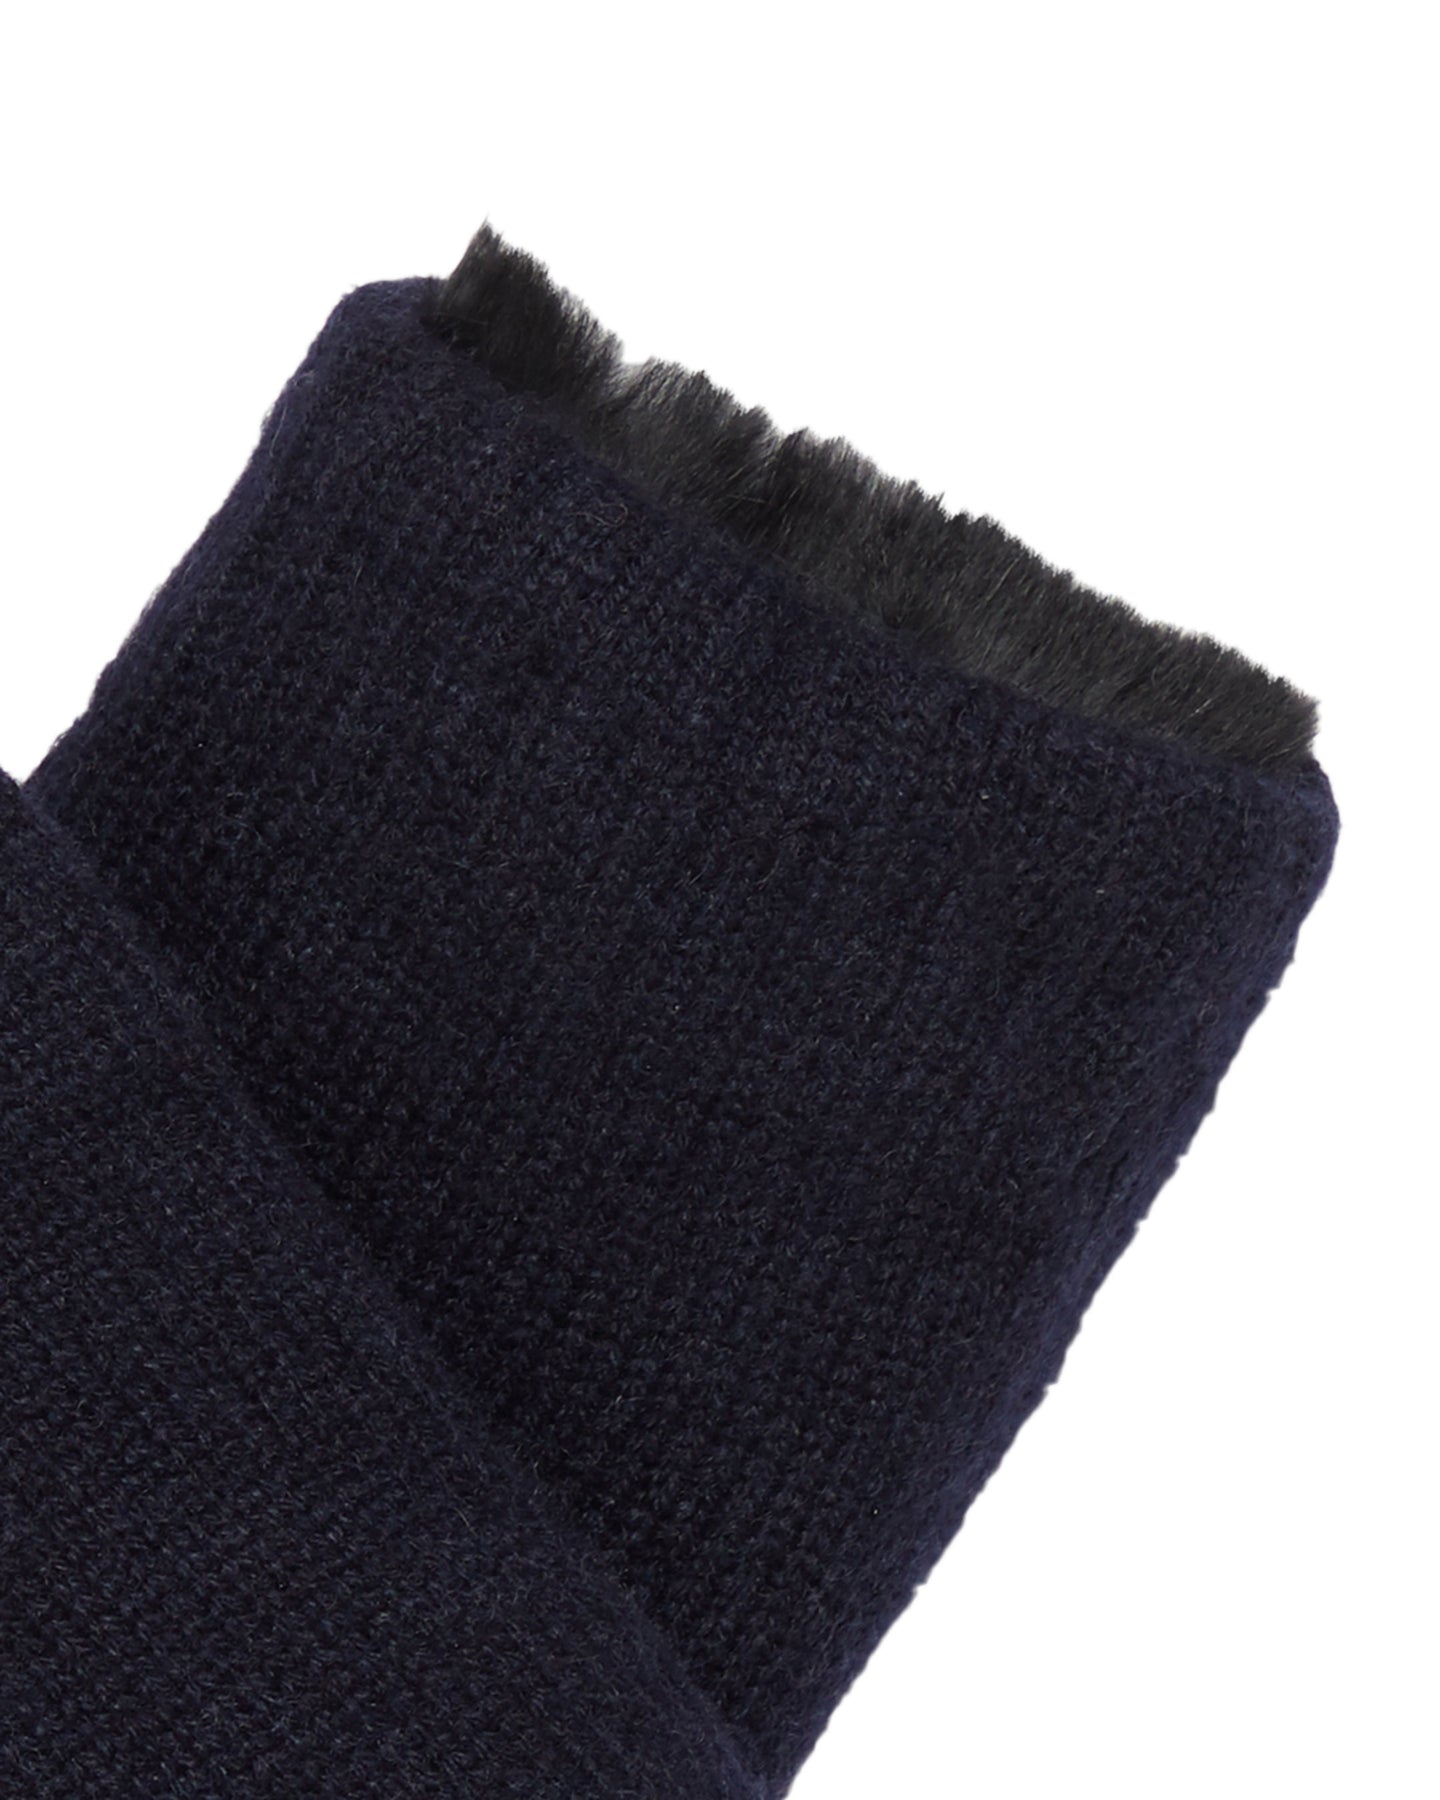 N.Peal Unisex Fur Lined Fingerless Cashmere Gloves Navy Blue